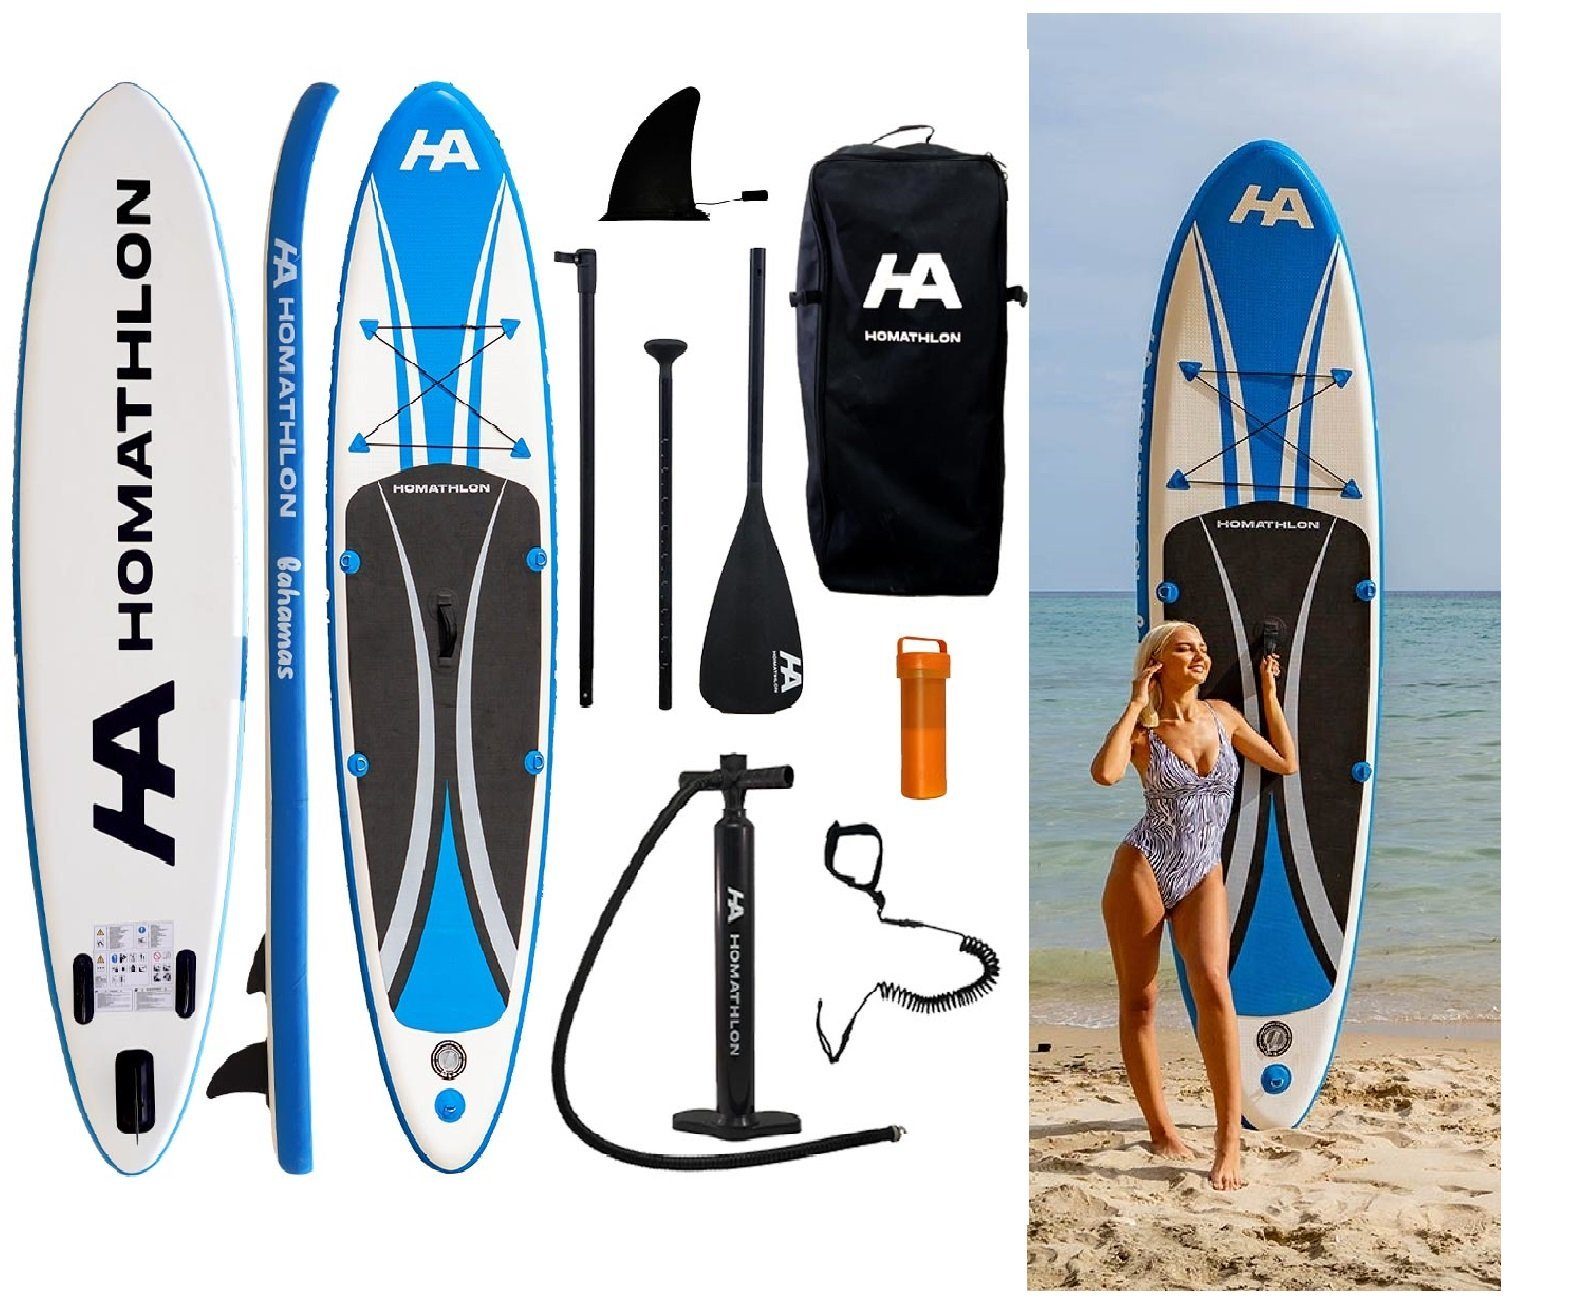 HOMATHLON 325cm Stand SUP-Board HA-25032 HomAthlon BAHAMAS Up Inflatable Paddle Board